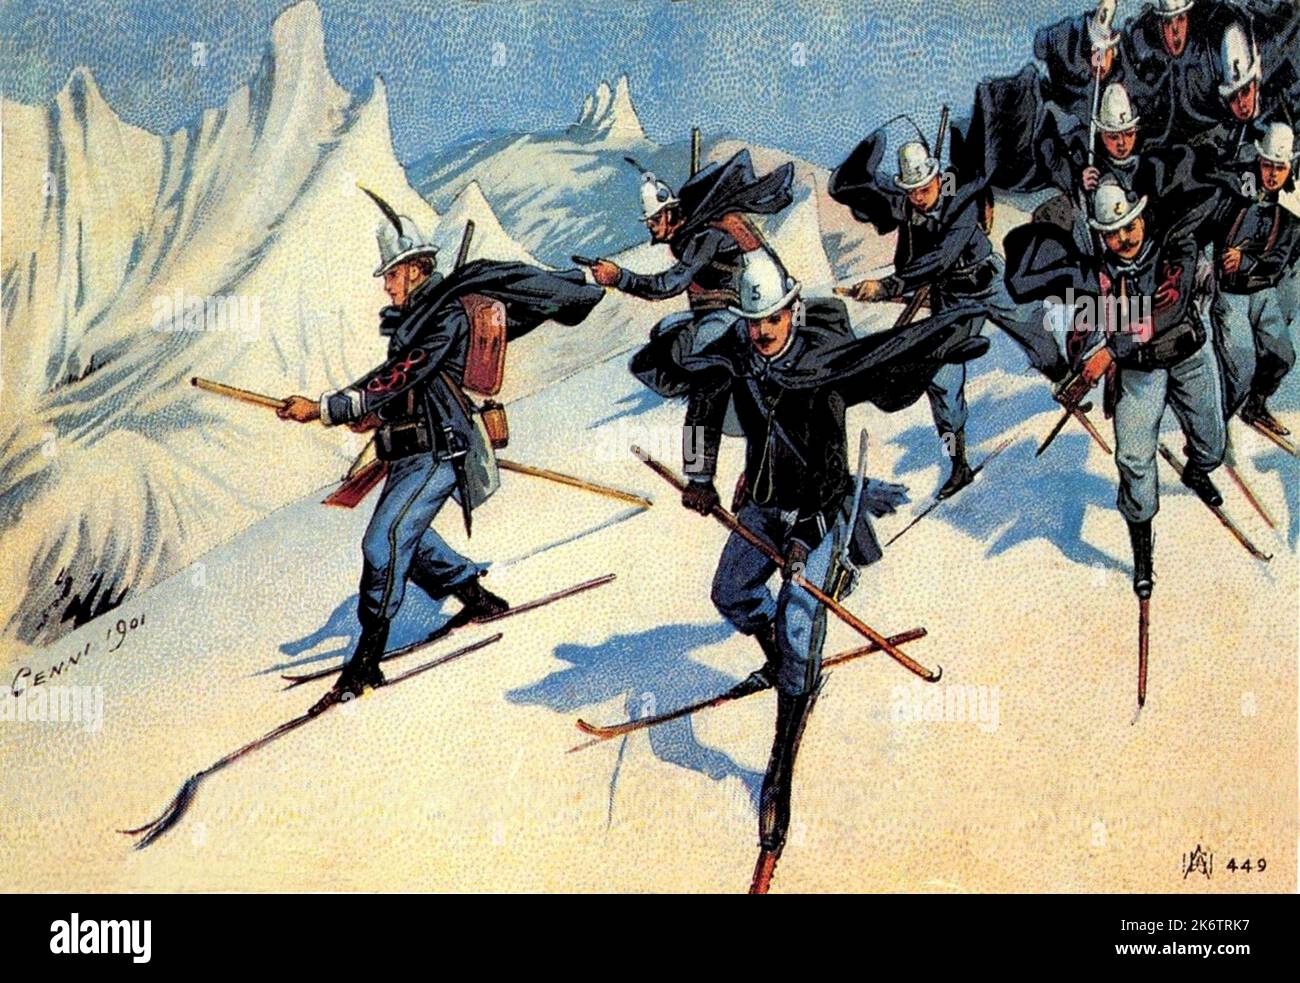 1901 , ITALIEN : Eine Postkarte mit italienischen Militär ALPINI auf dem Ski . Kunstwerk von Cenni . - ALPINI - ALPINE - CARTOLINA POSTALE - PRIMA GUERRA MONDIALE - erster Weltkrieg - erster Weltkrieg - erster Weltkrieg - miliari soldati italiani - GESCHICHTE - FOTO STORICHE - PROPAGANDA - ILLUSTRATION - neve - Snow - sci - sciatori --- Archivio GBB Stockfoto